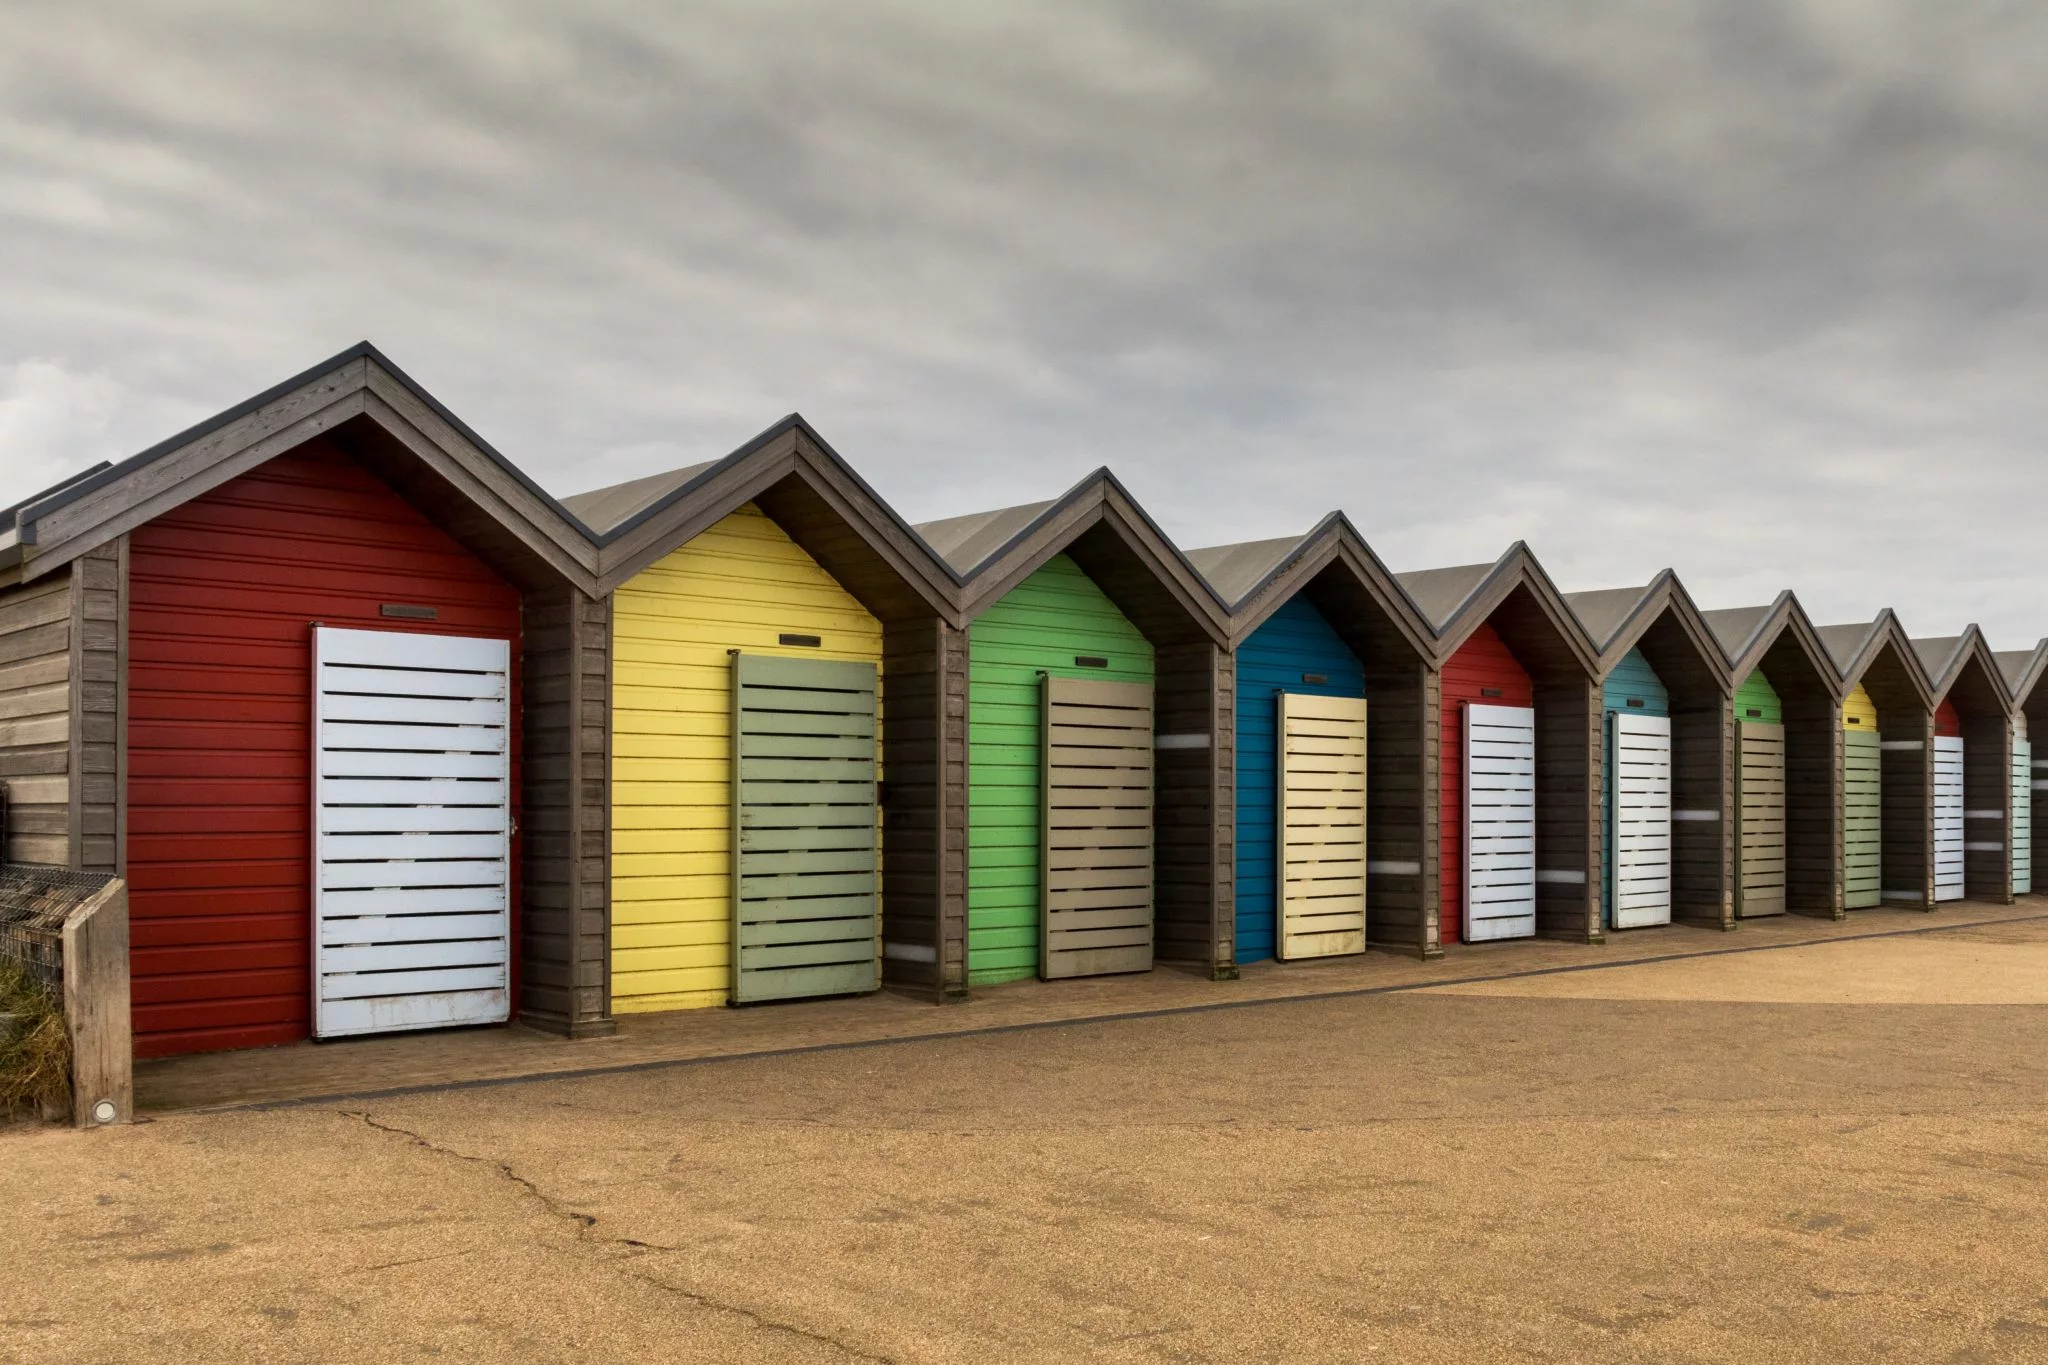 Blyth Beach huts, United Kingdom